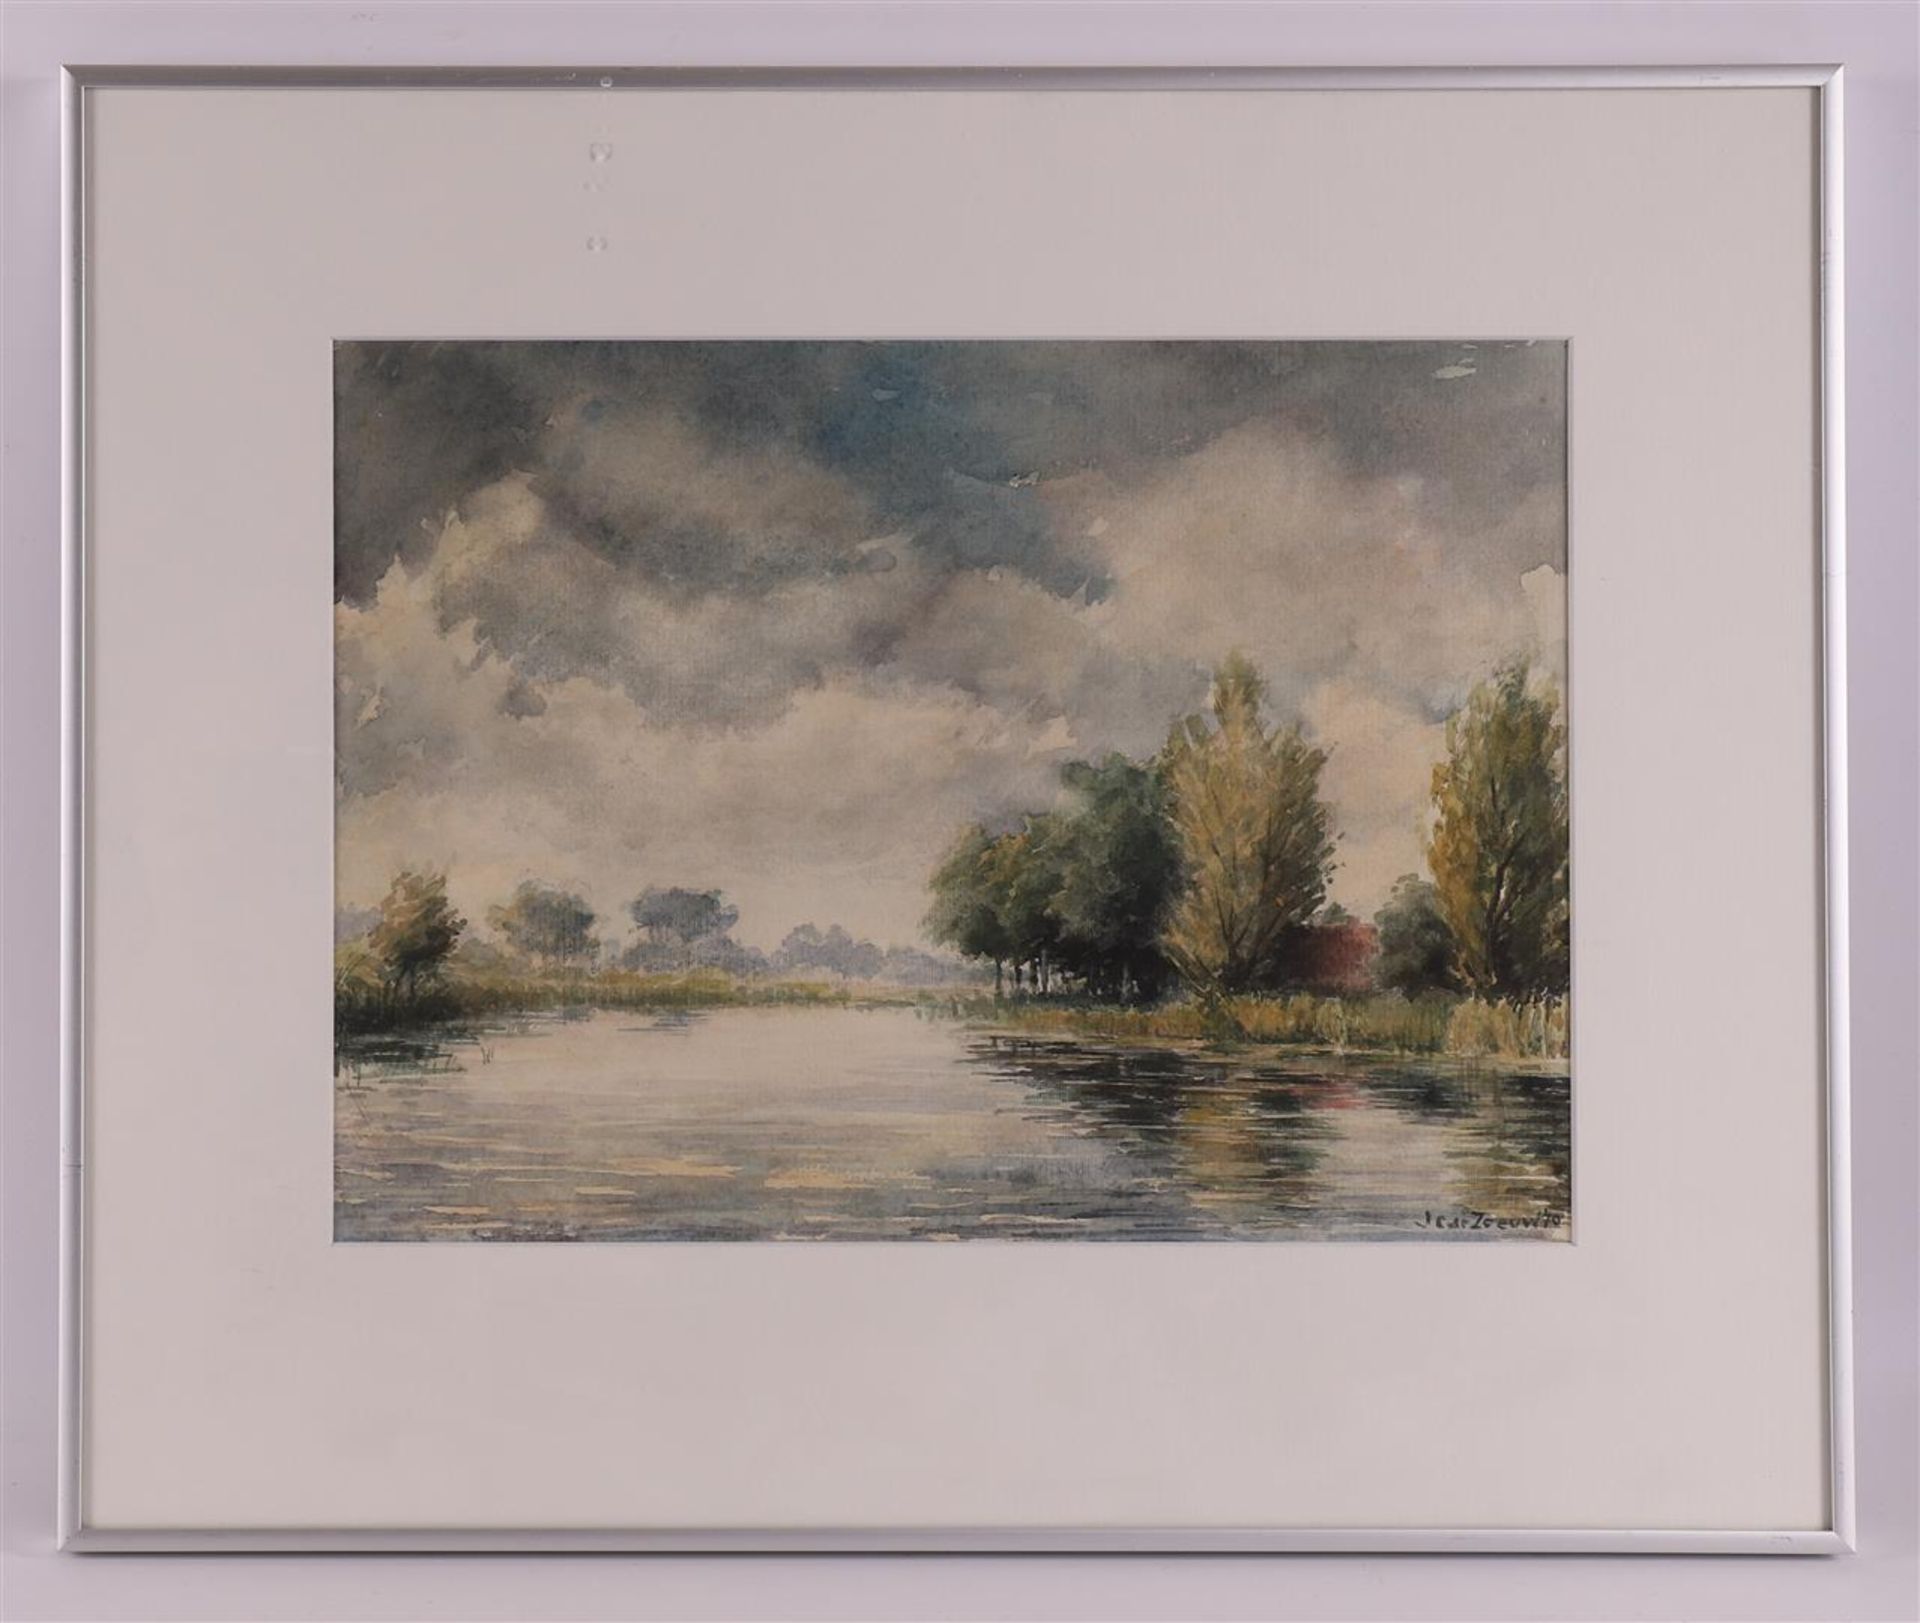 Zeeuw, the J.C. (Dutch school 20th century) 'River landscape and trees, farm